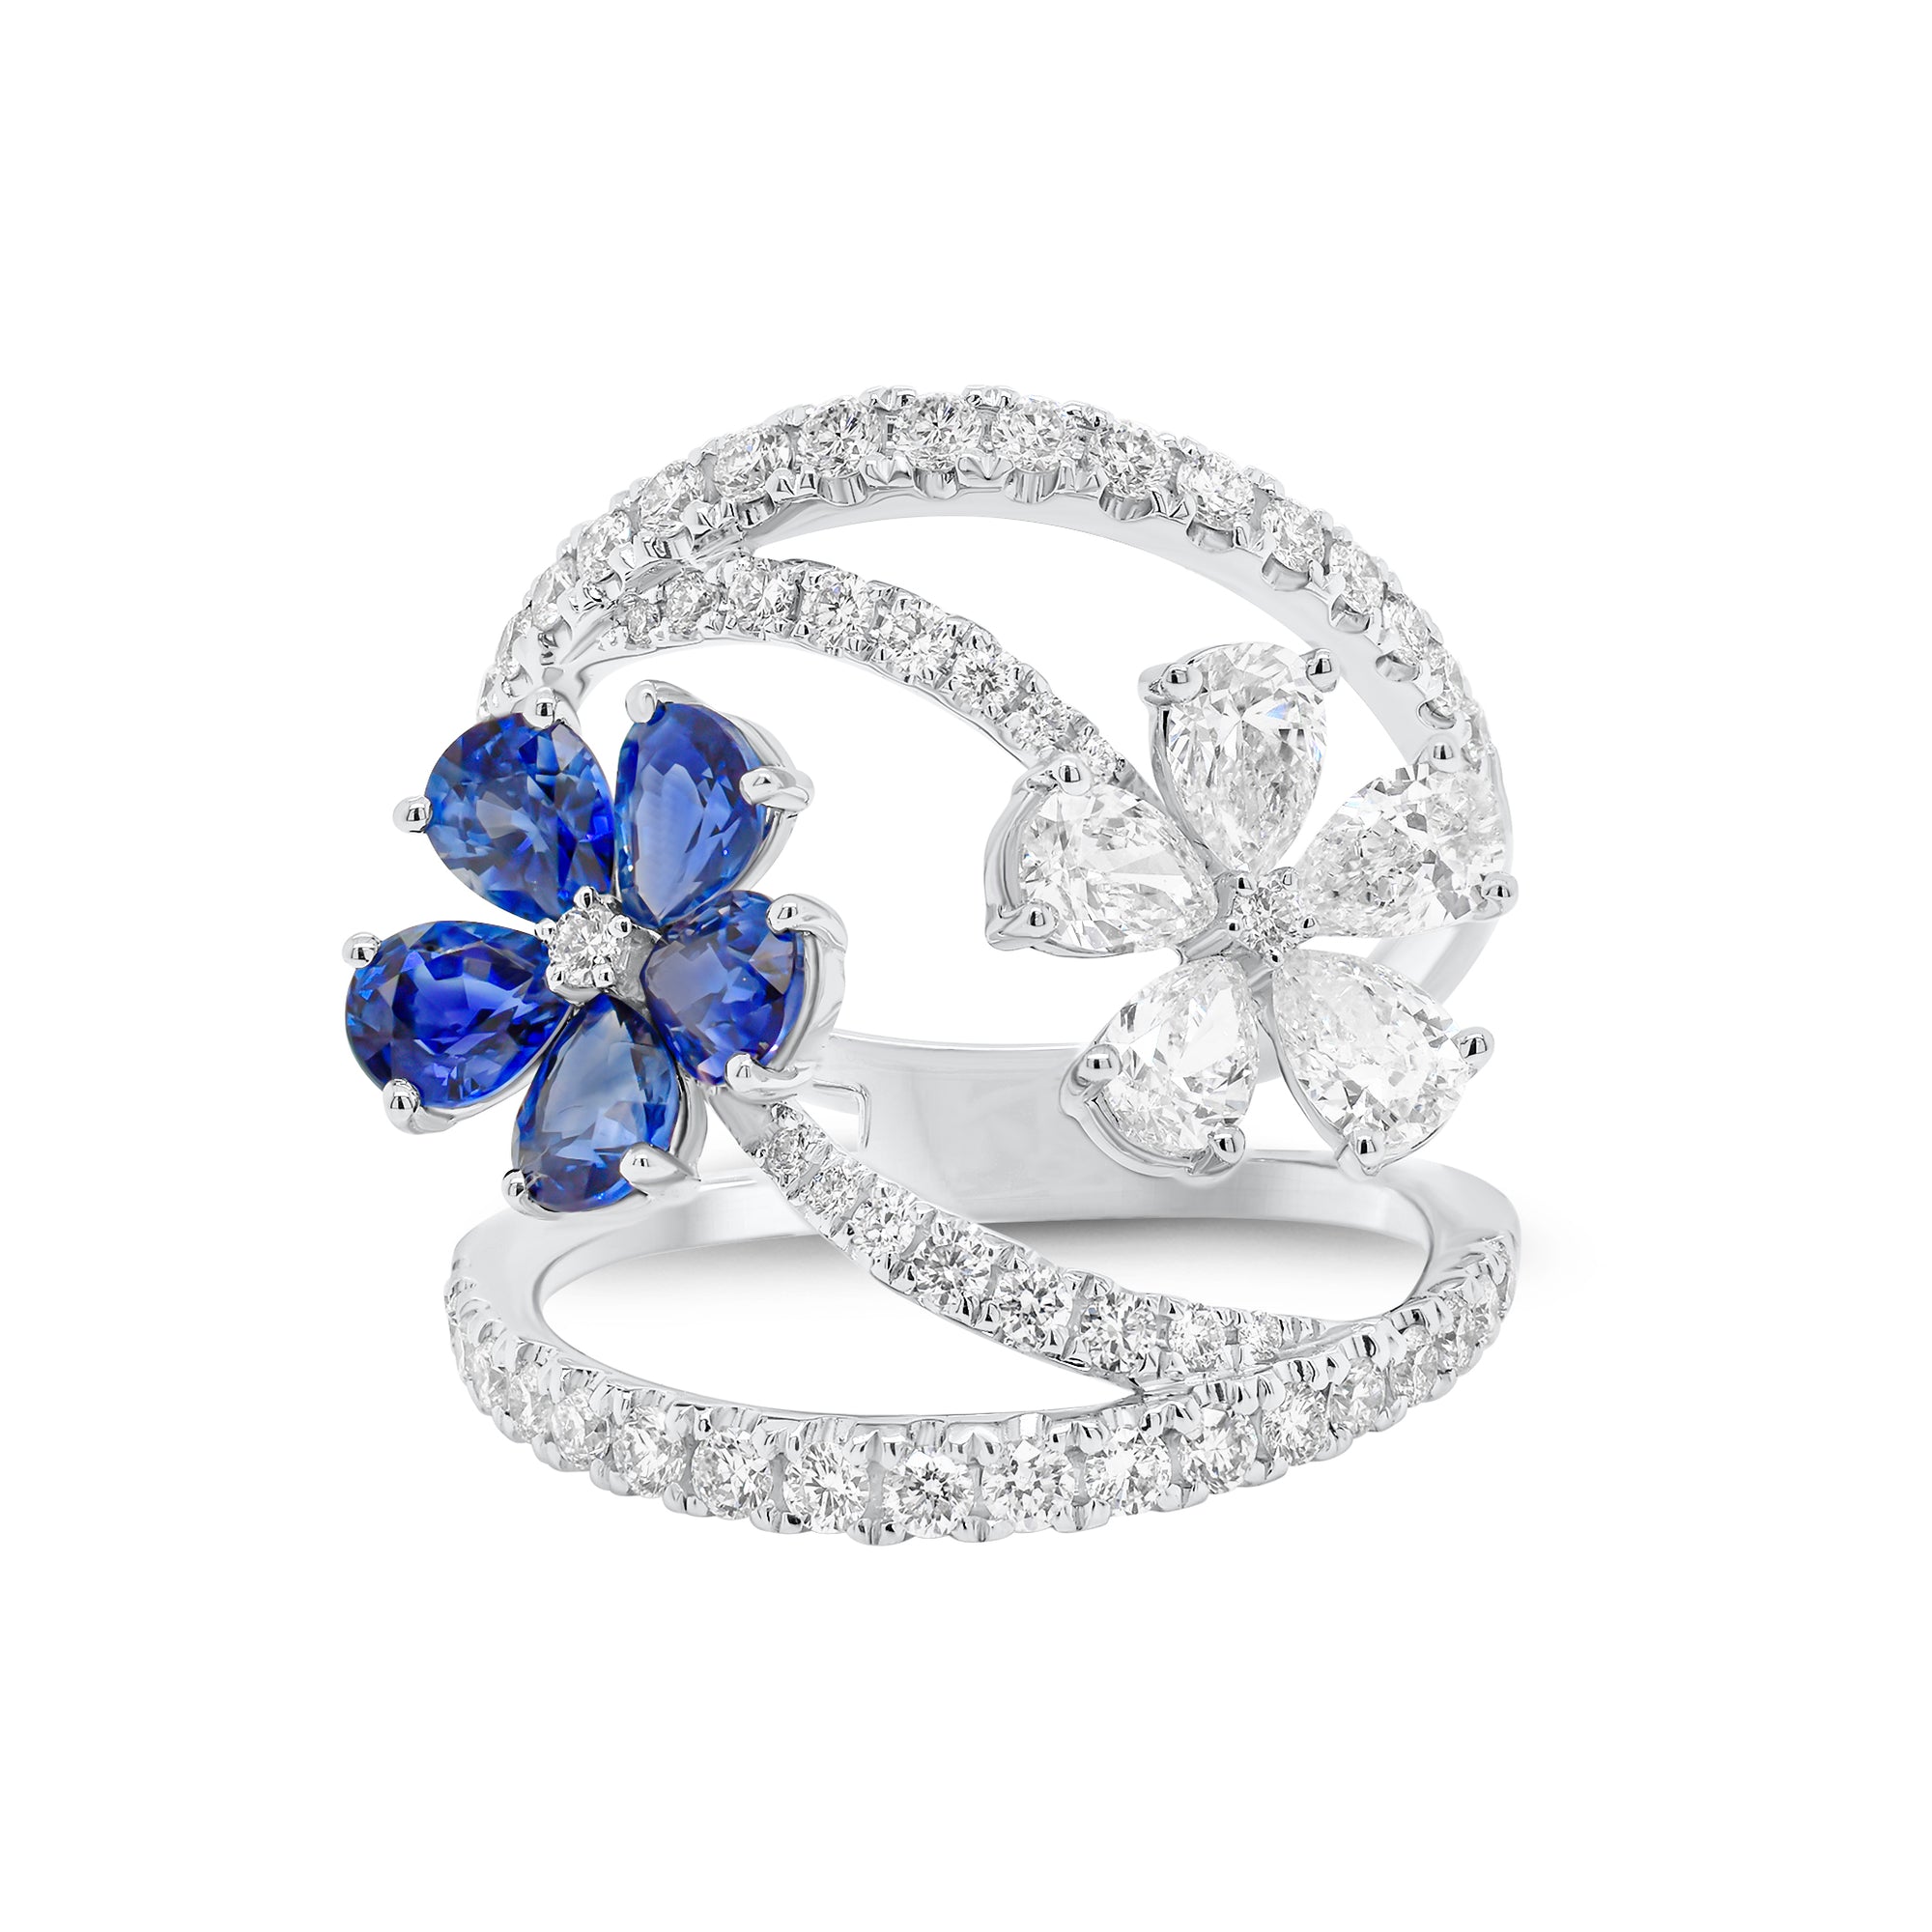 Diamond & Sapphire Flower Wrap Ring- 18K gold weighing 5.61 grams  - 56 round diamonds weighing 0.74 carats  - 5 pear-shaped sapphires weighing 1.49 carats  - 5 pear-shaped diamonds weighing 0.75 carats